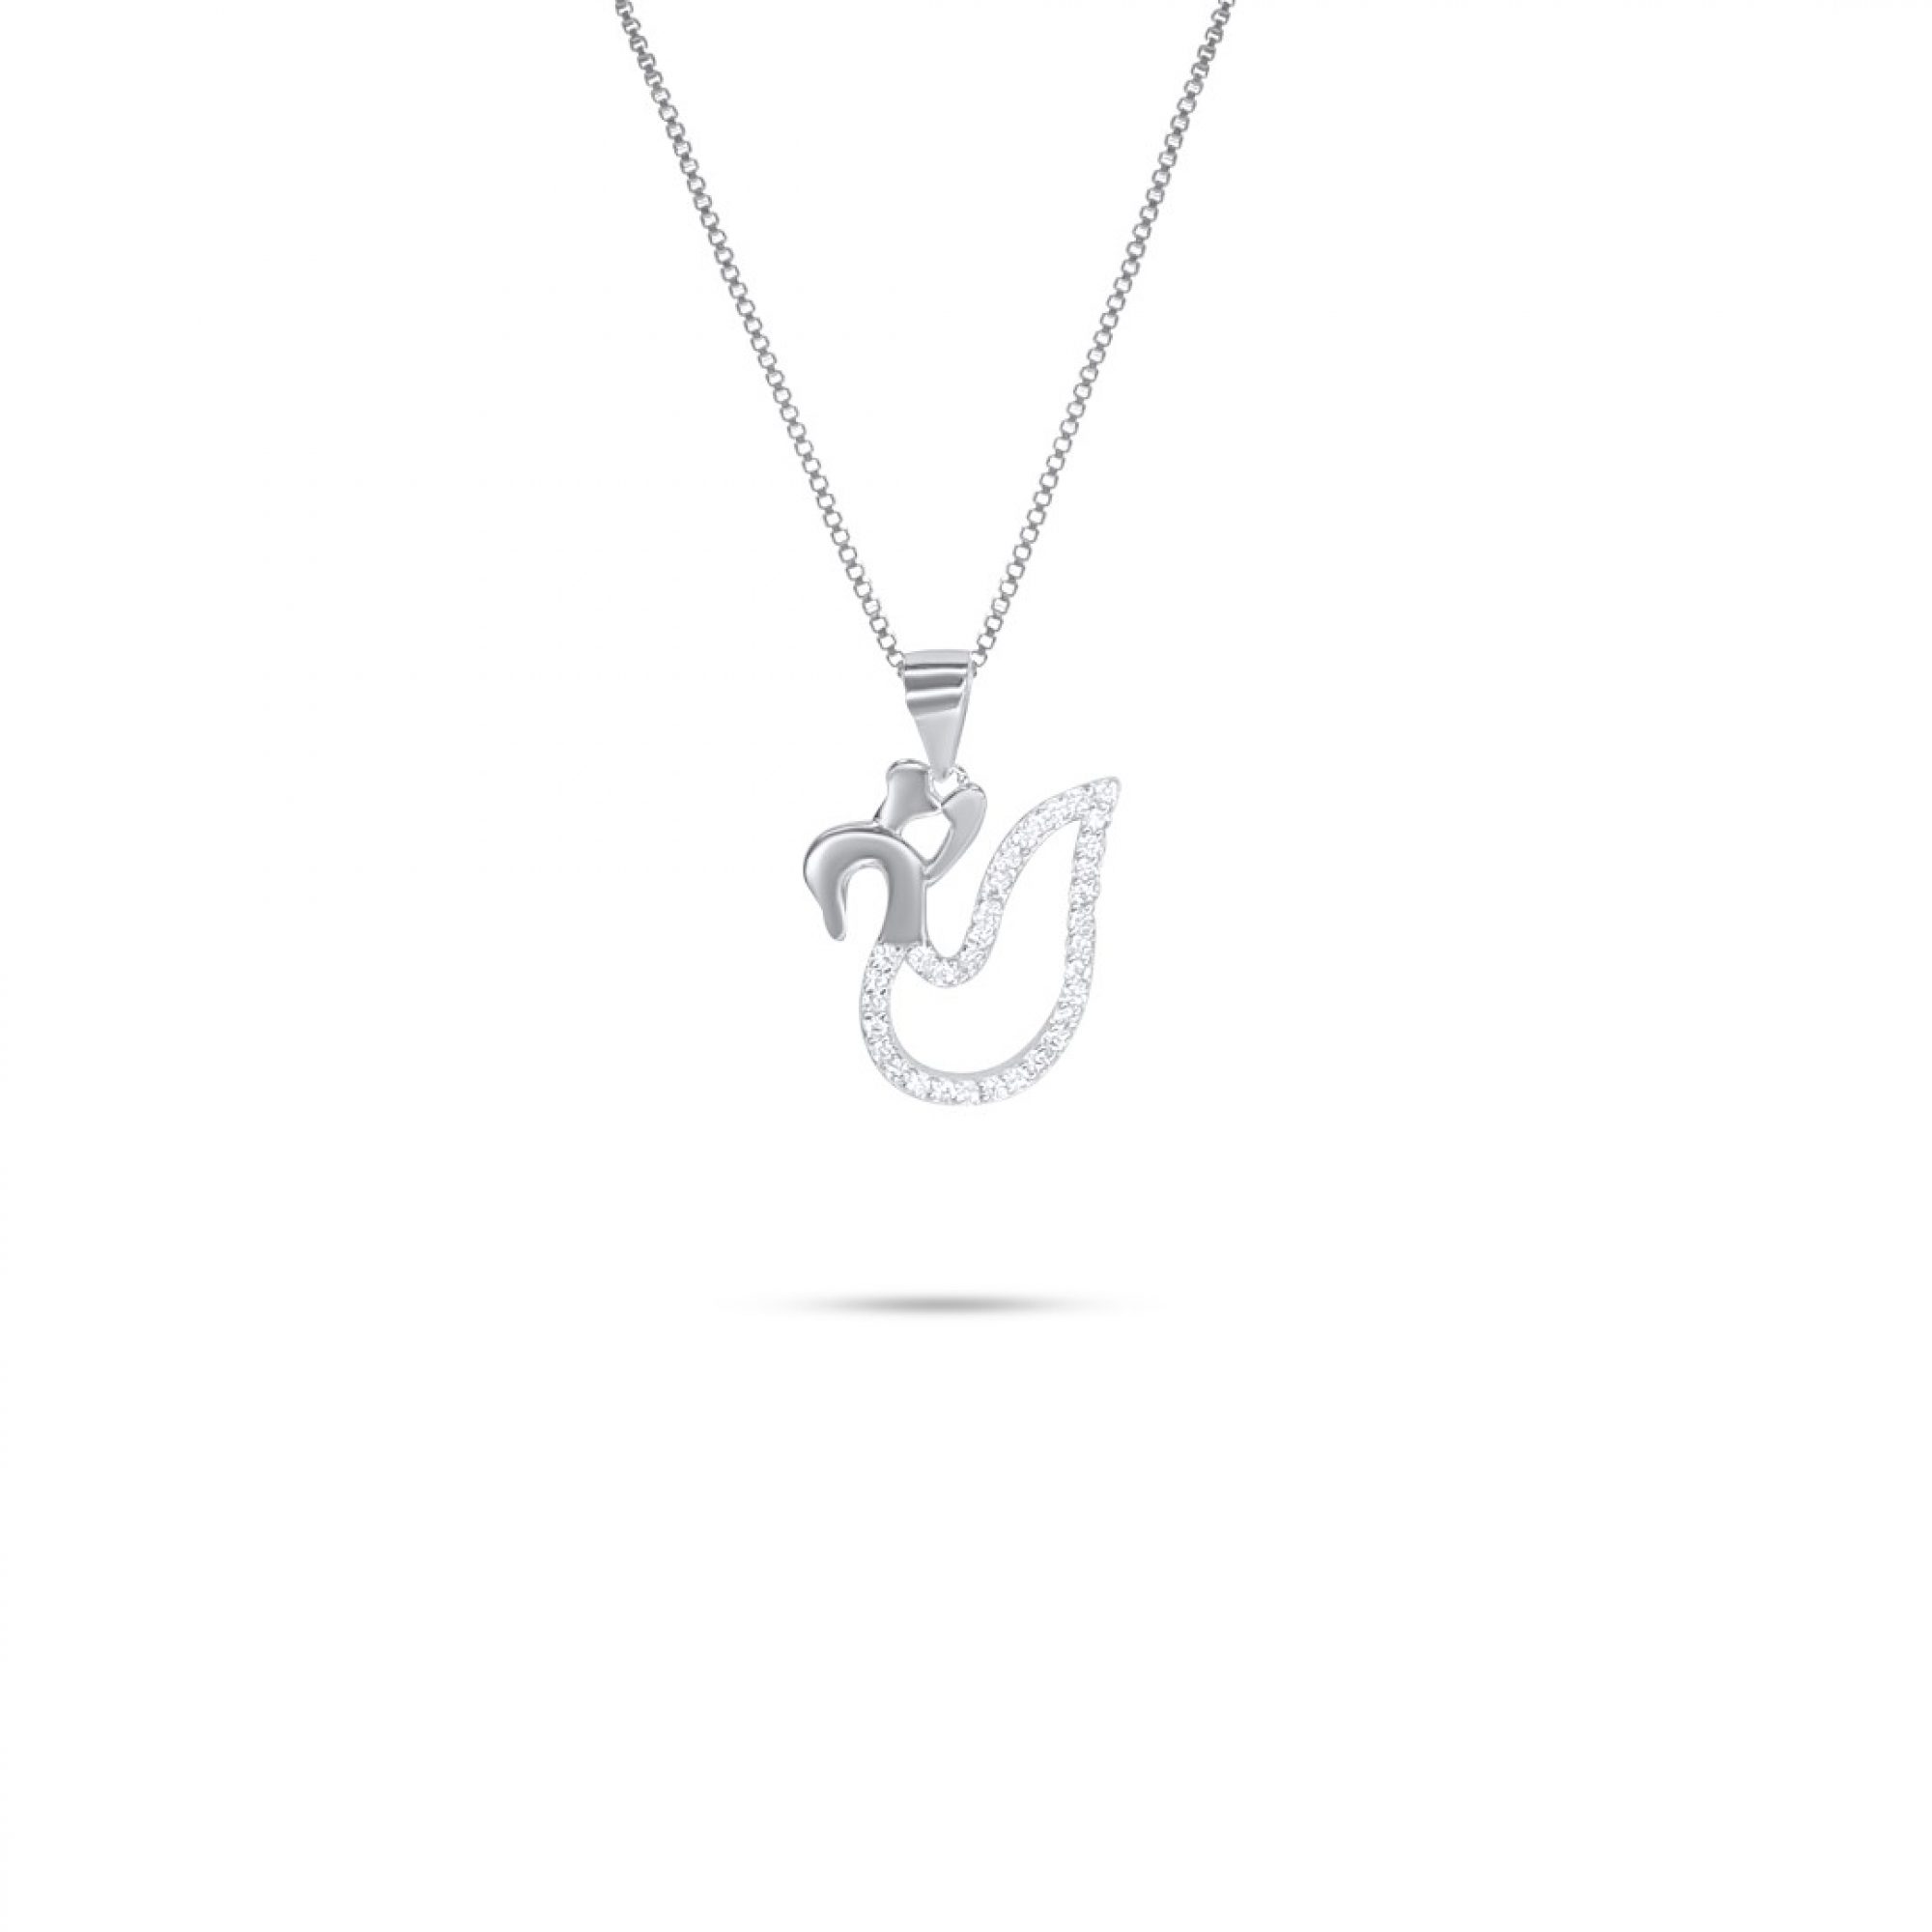 Swan necklace with zircon stones